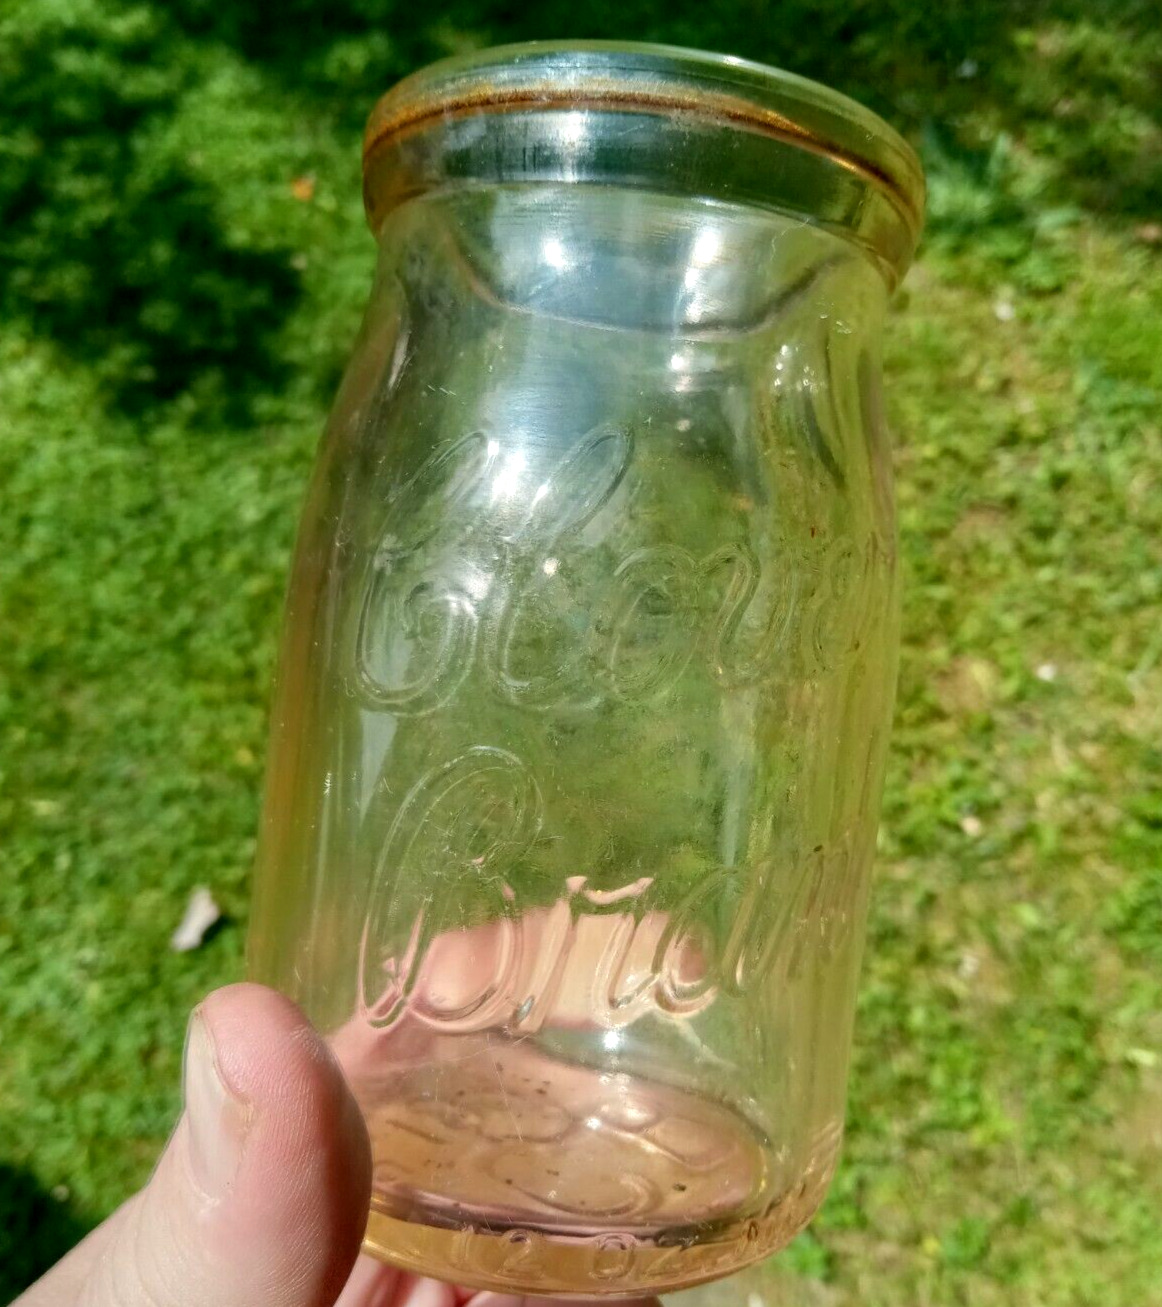 1941 CLOVER BRAND Dairy Bottle Roanoke, VA Embossed Glass Cottage Cheese Jar